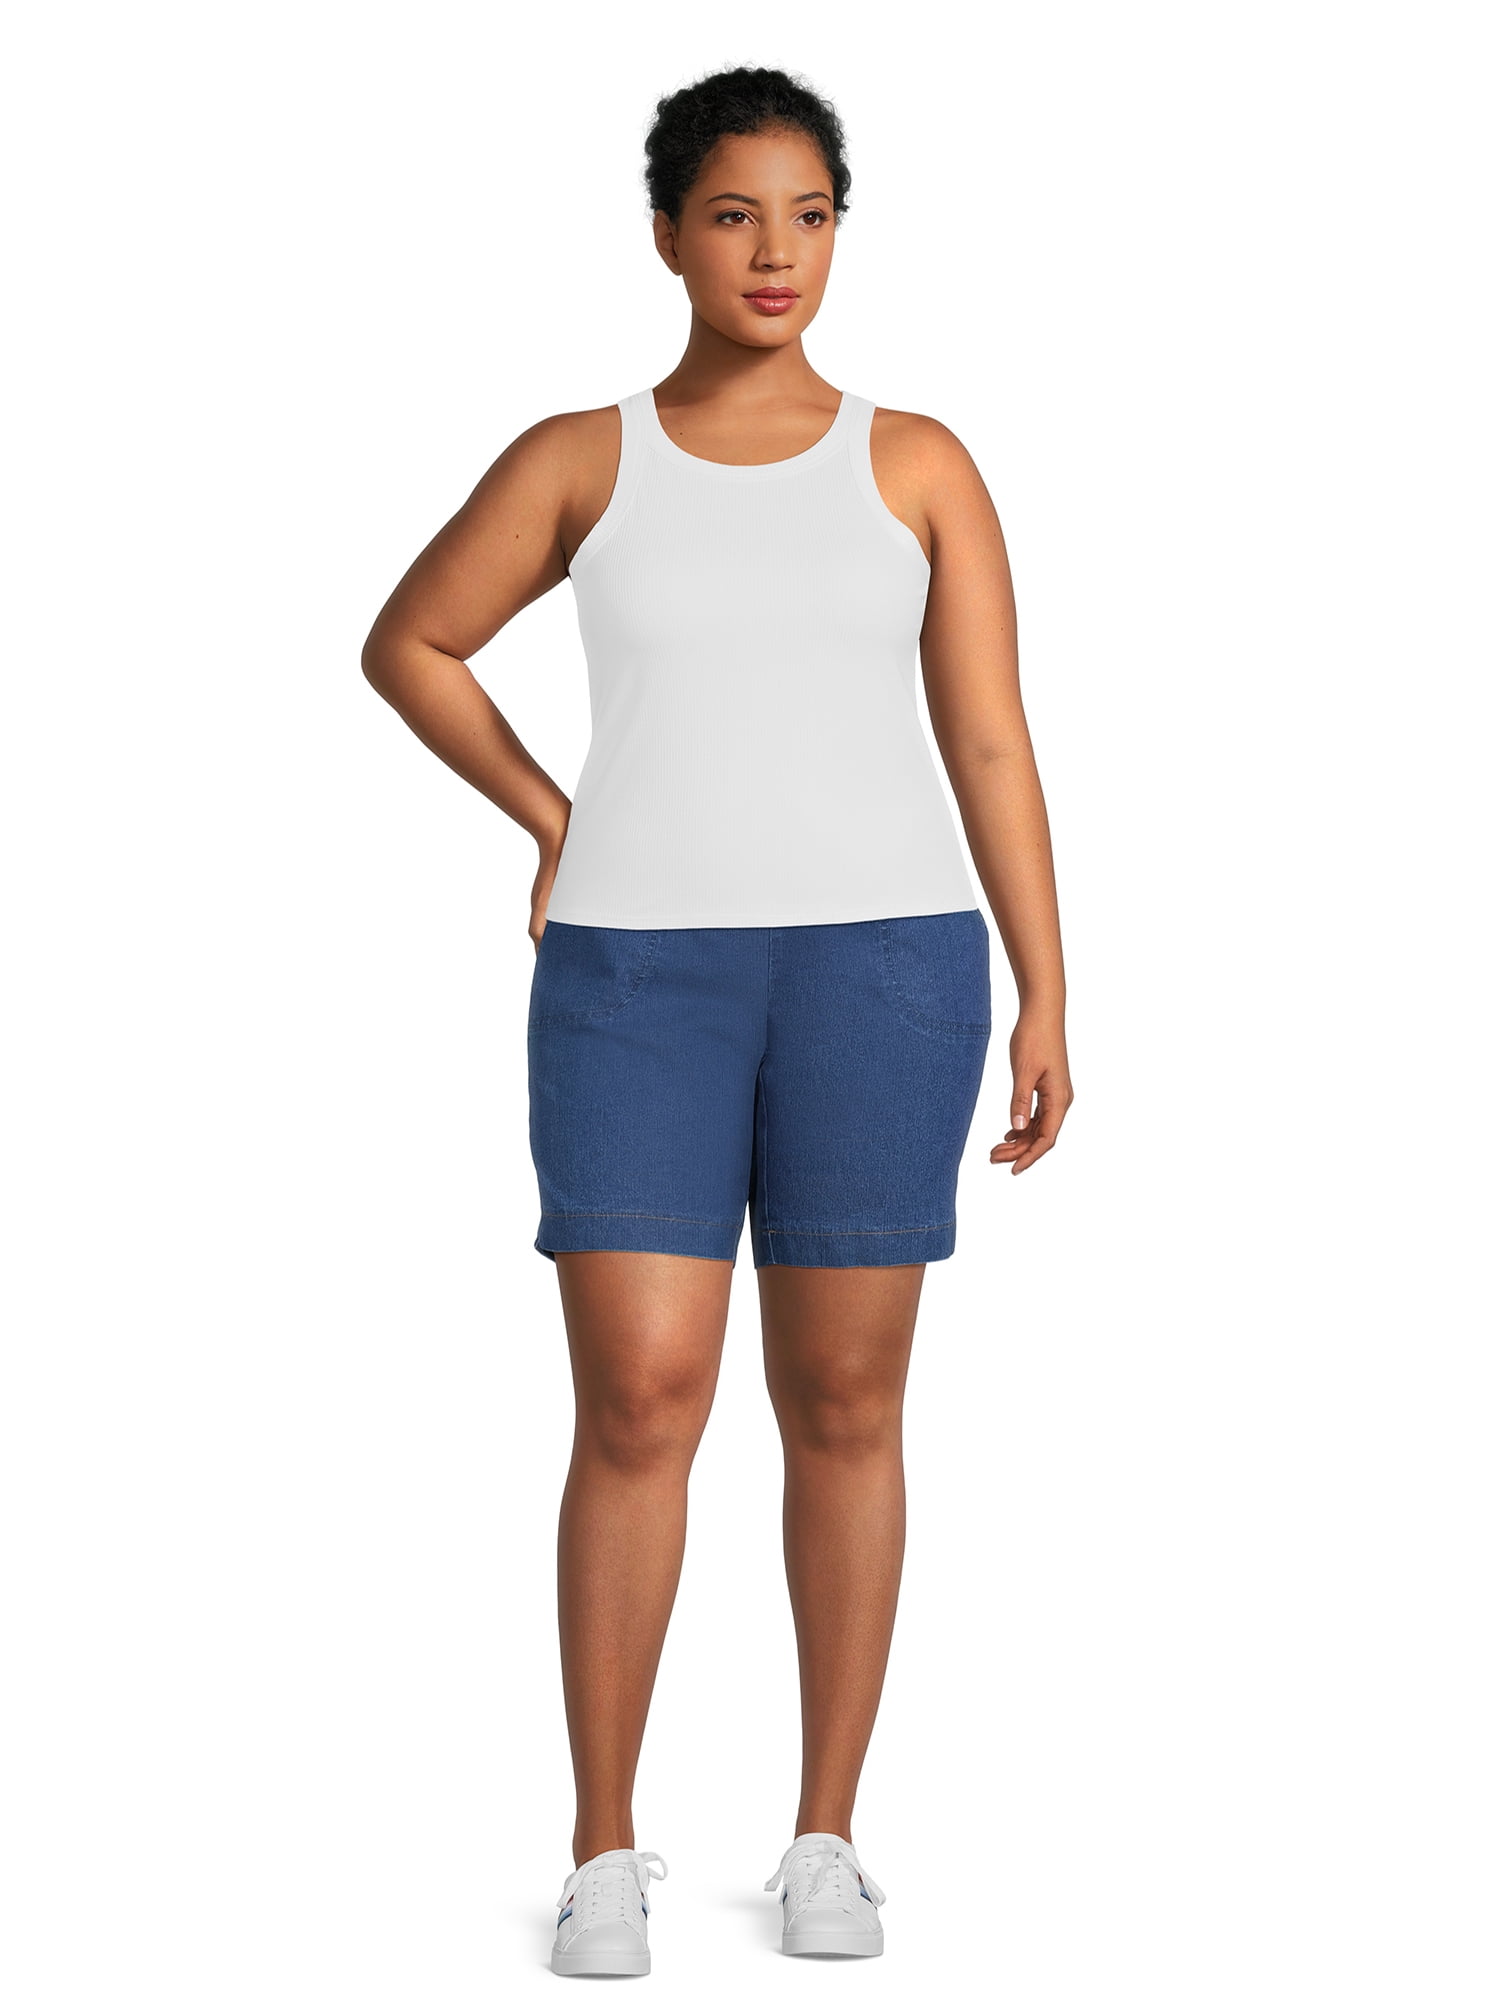 Shaper Plus Shorts ⭐ Buy One Get Two! X2 ⭐ - Legit Passion ™